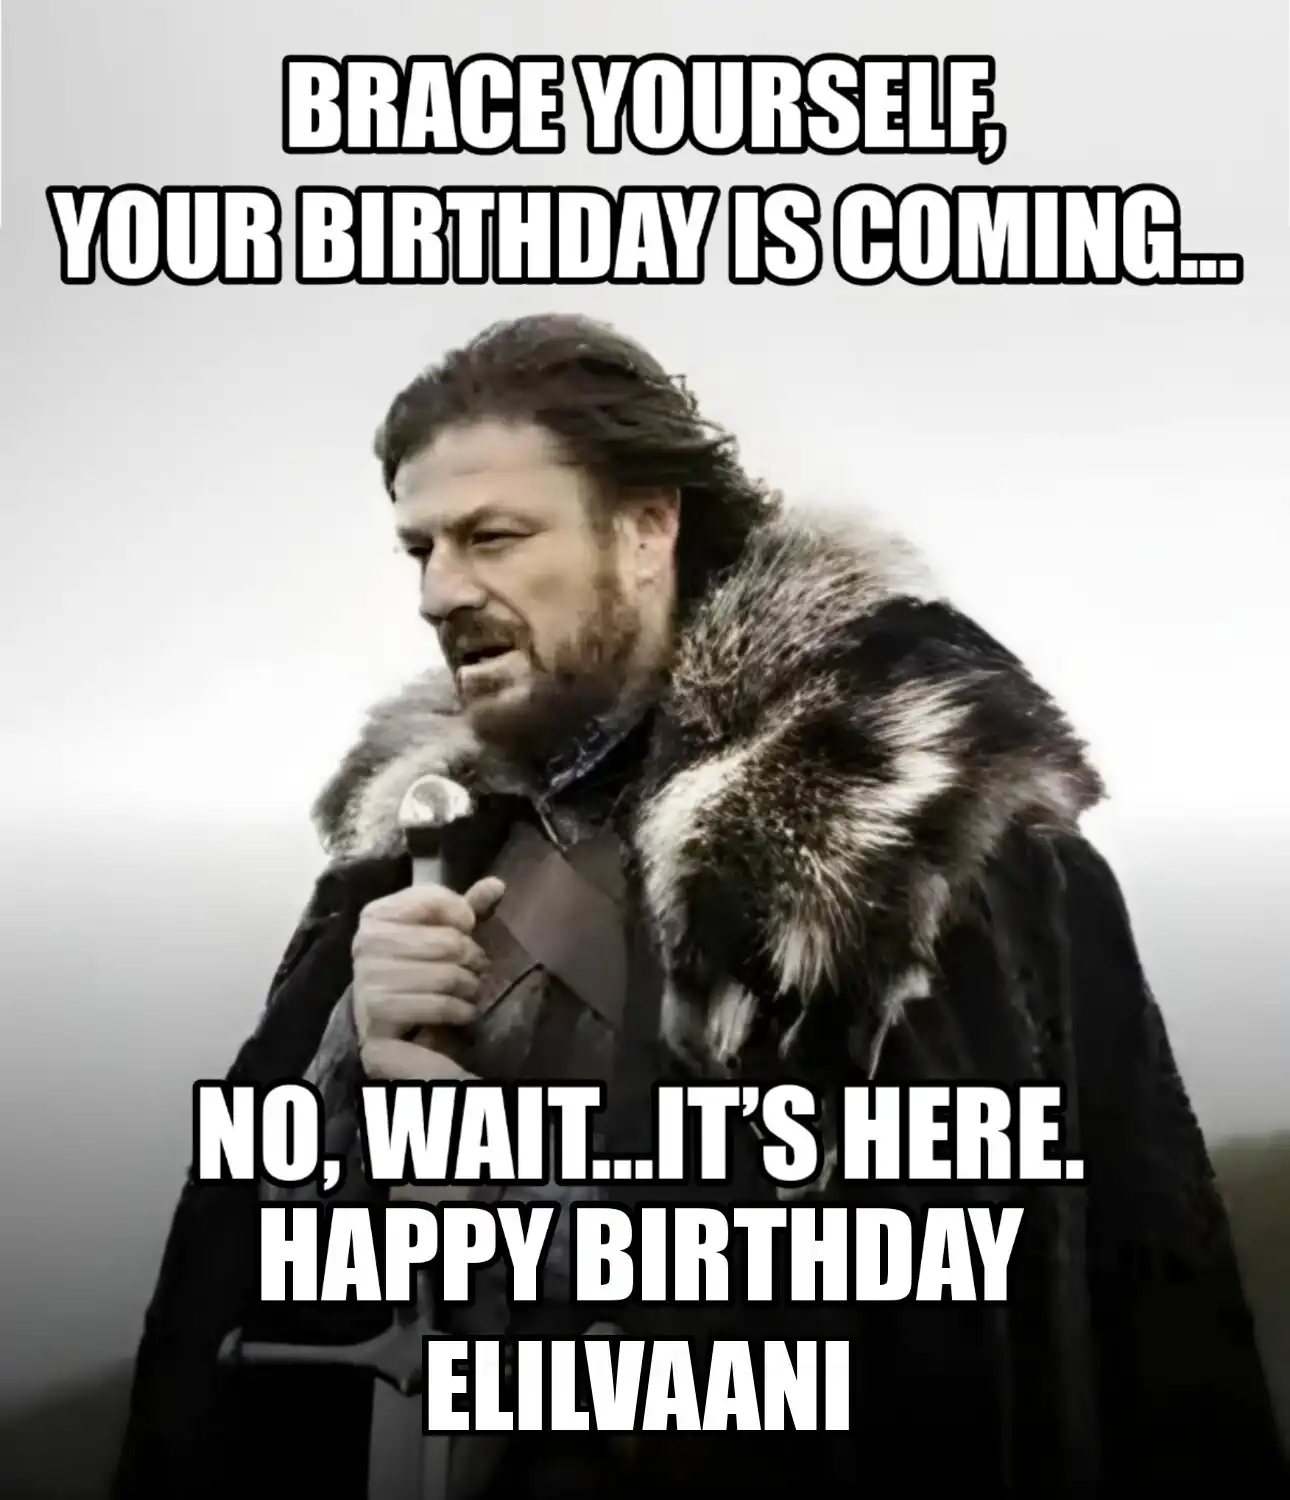 Happy Birthday Elilvaani Brace Yourself Your Birthday Is Coming Meme